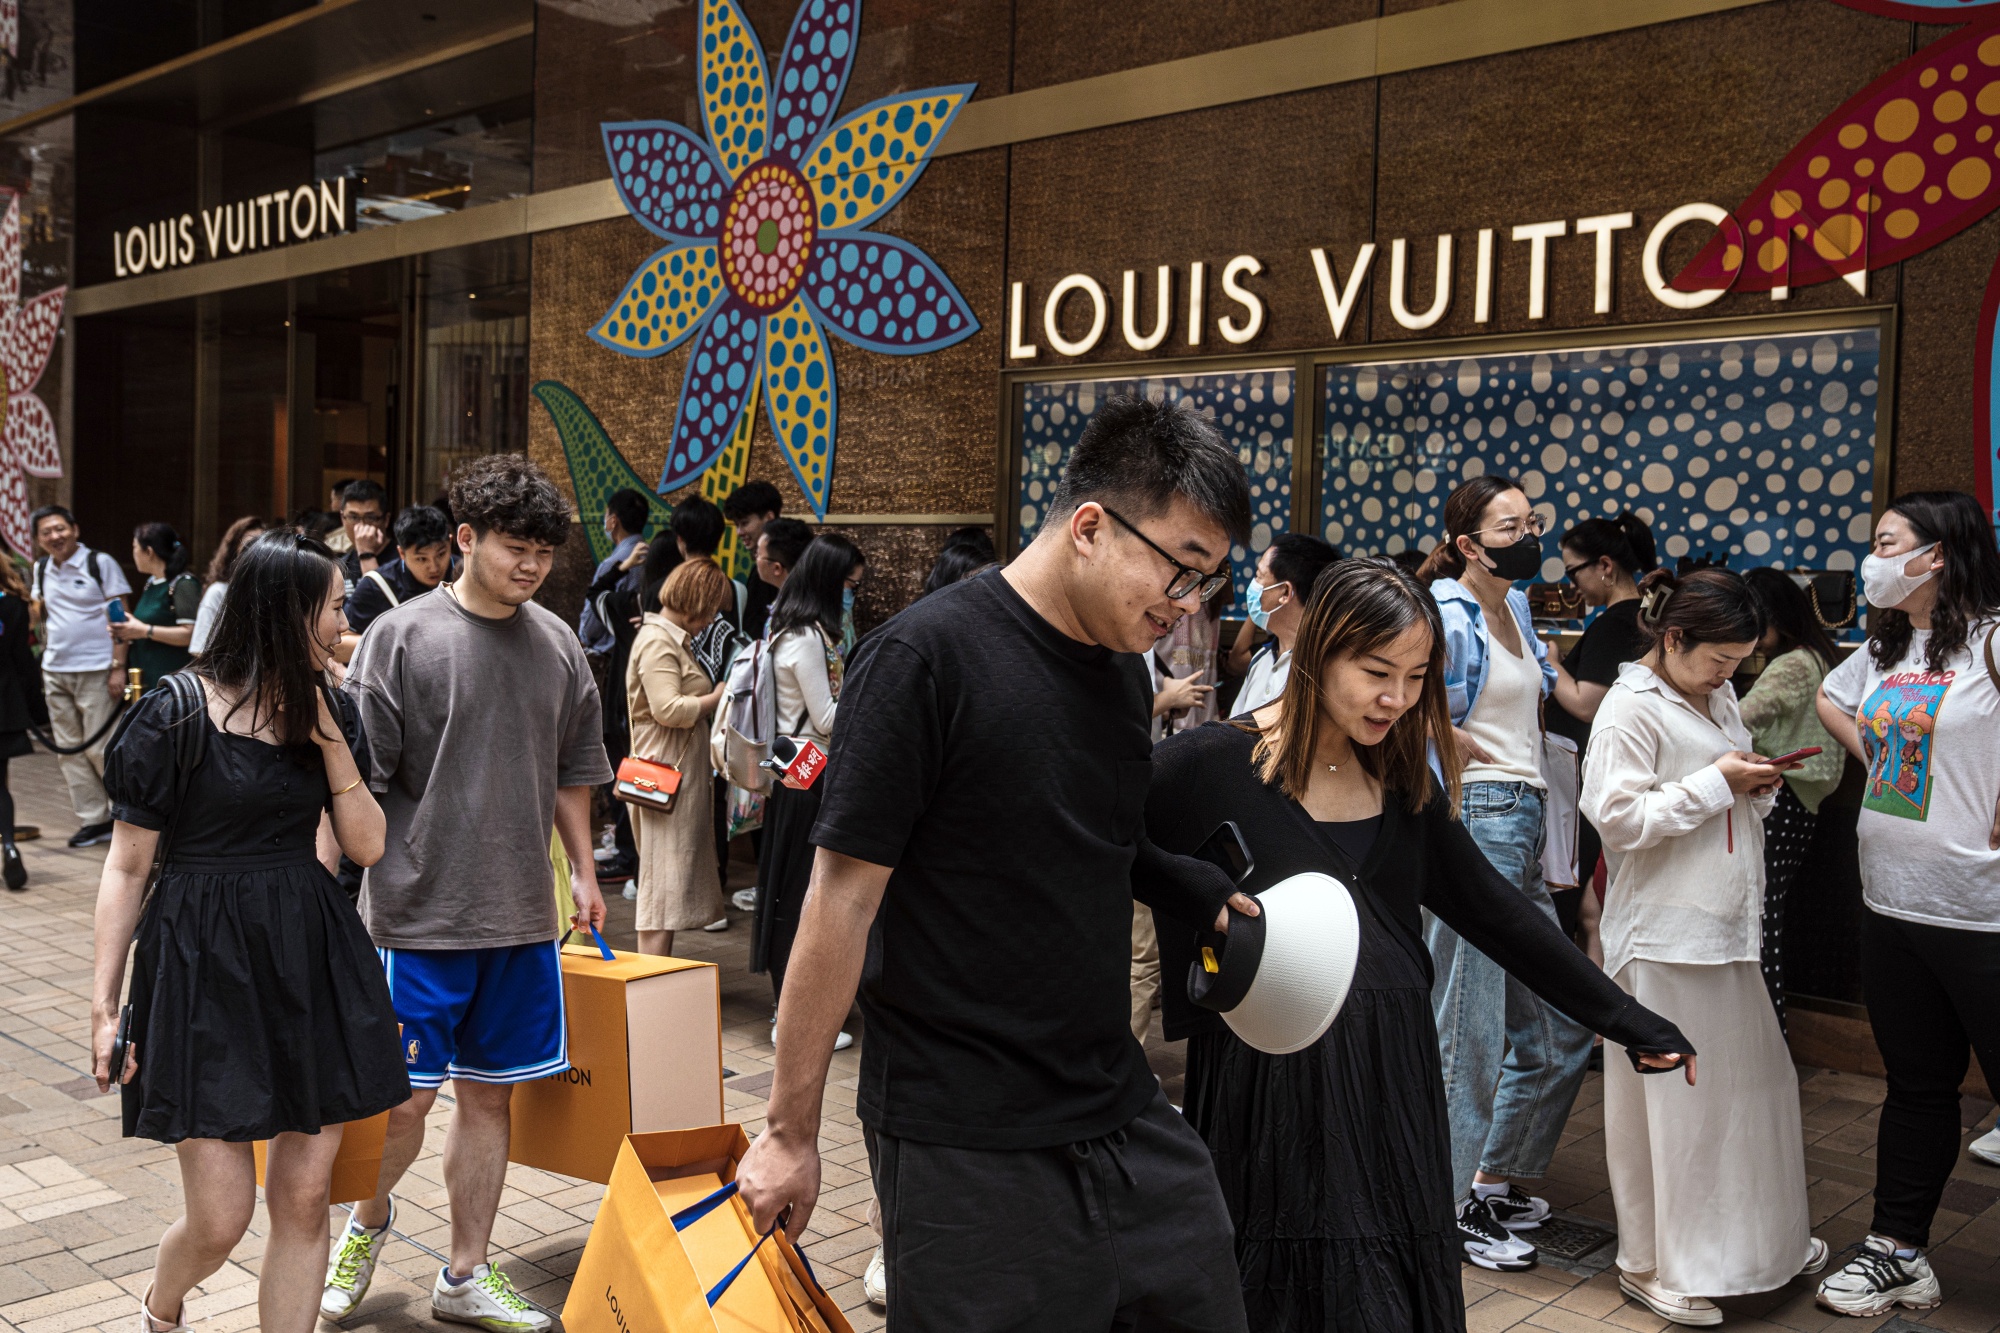 Louis Vuitton Hong Kong problems 'cyclical' - Inside Retail Asia